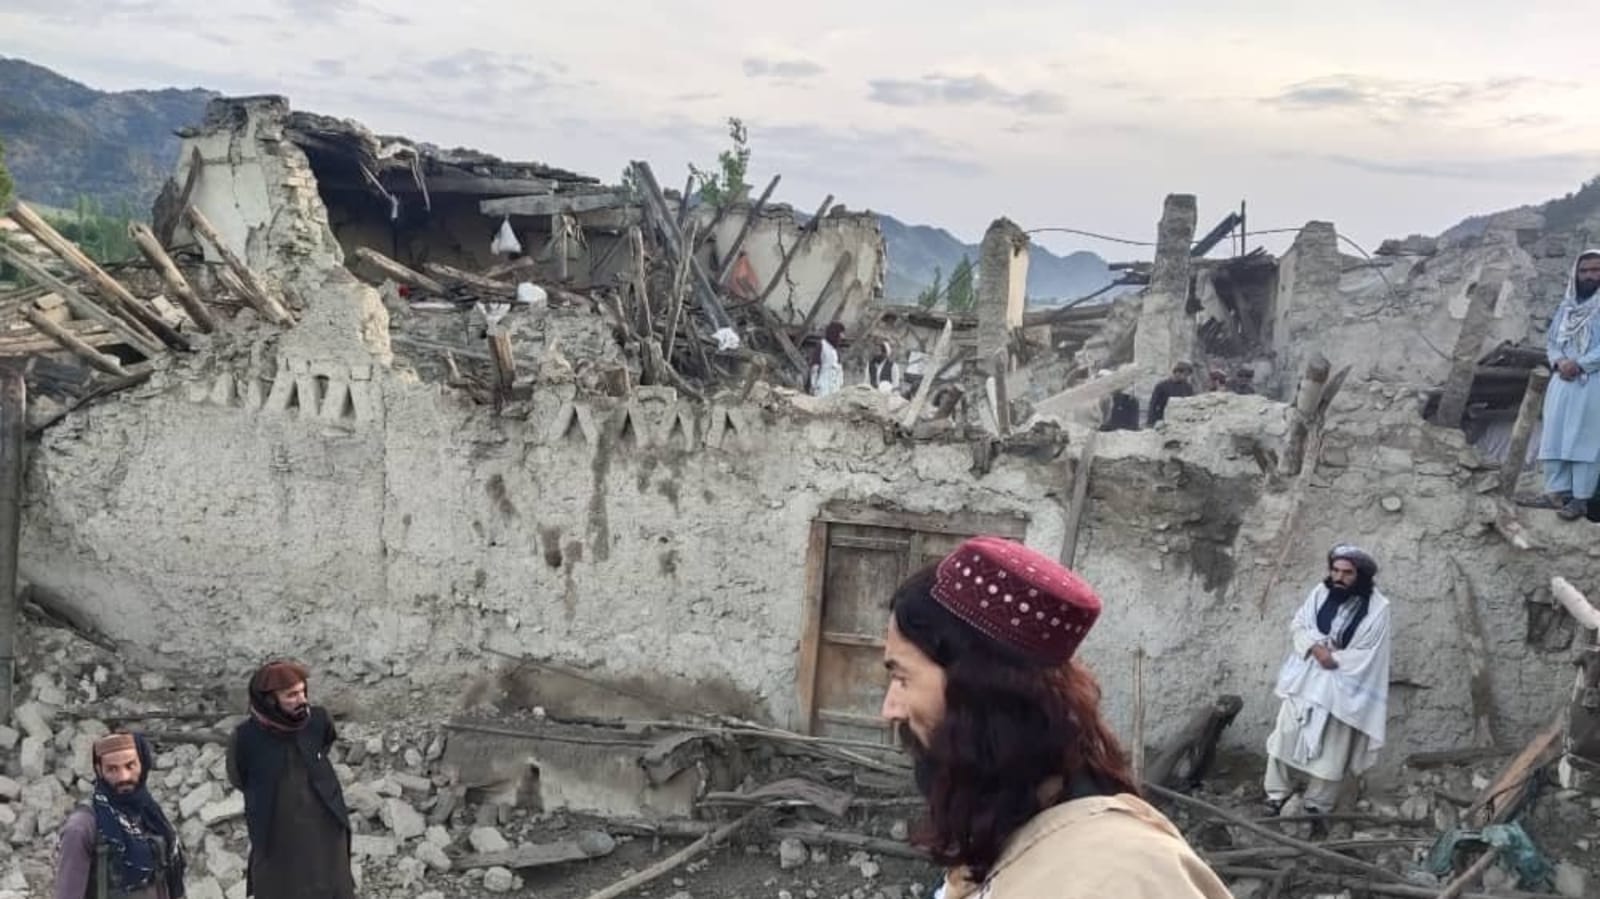 Afghanistan quake kills 920, injures 610, says Taliban minister, asks for aid | World News - Hindustan Times